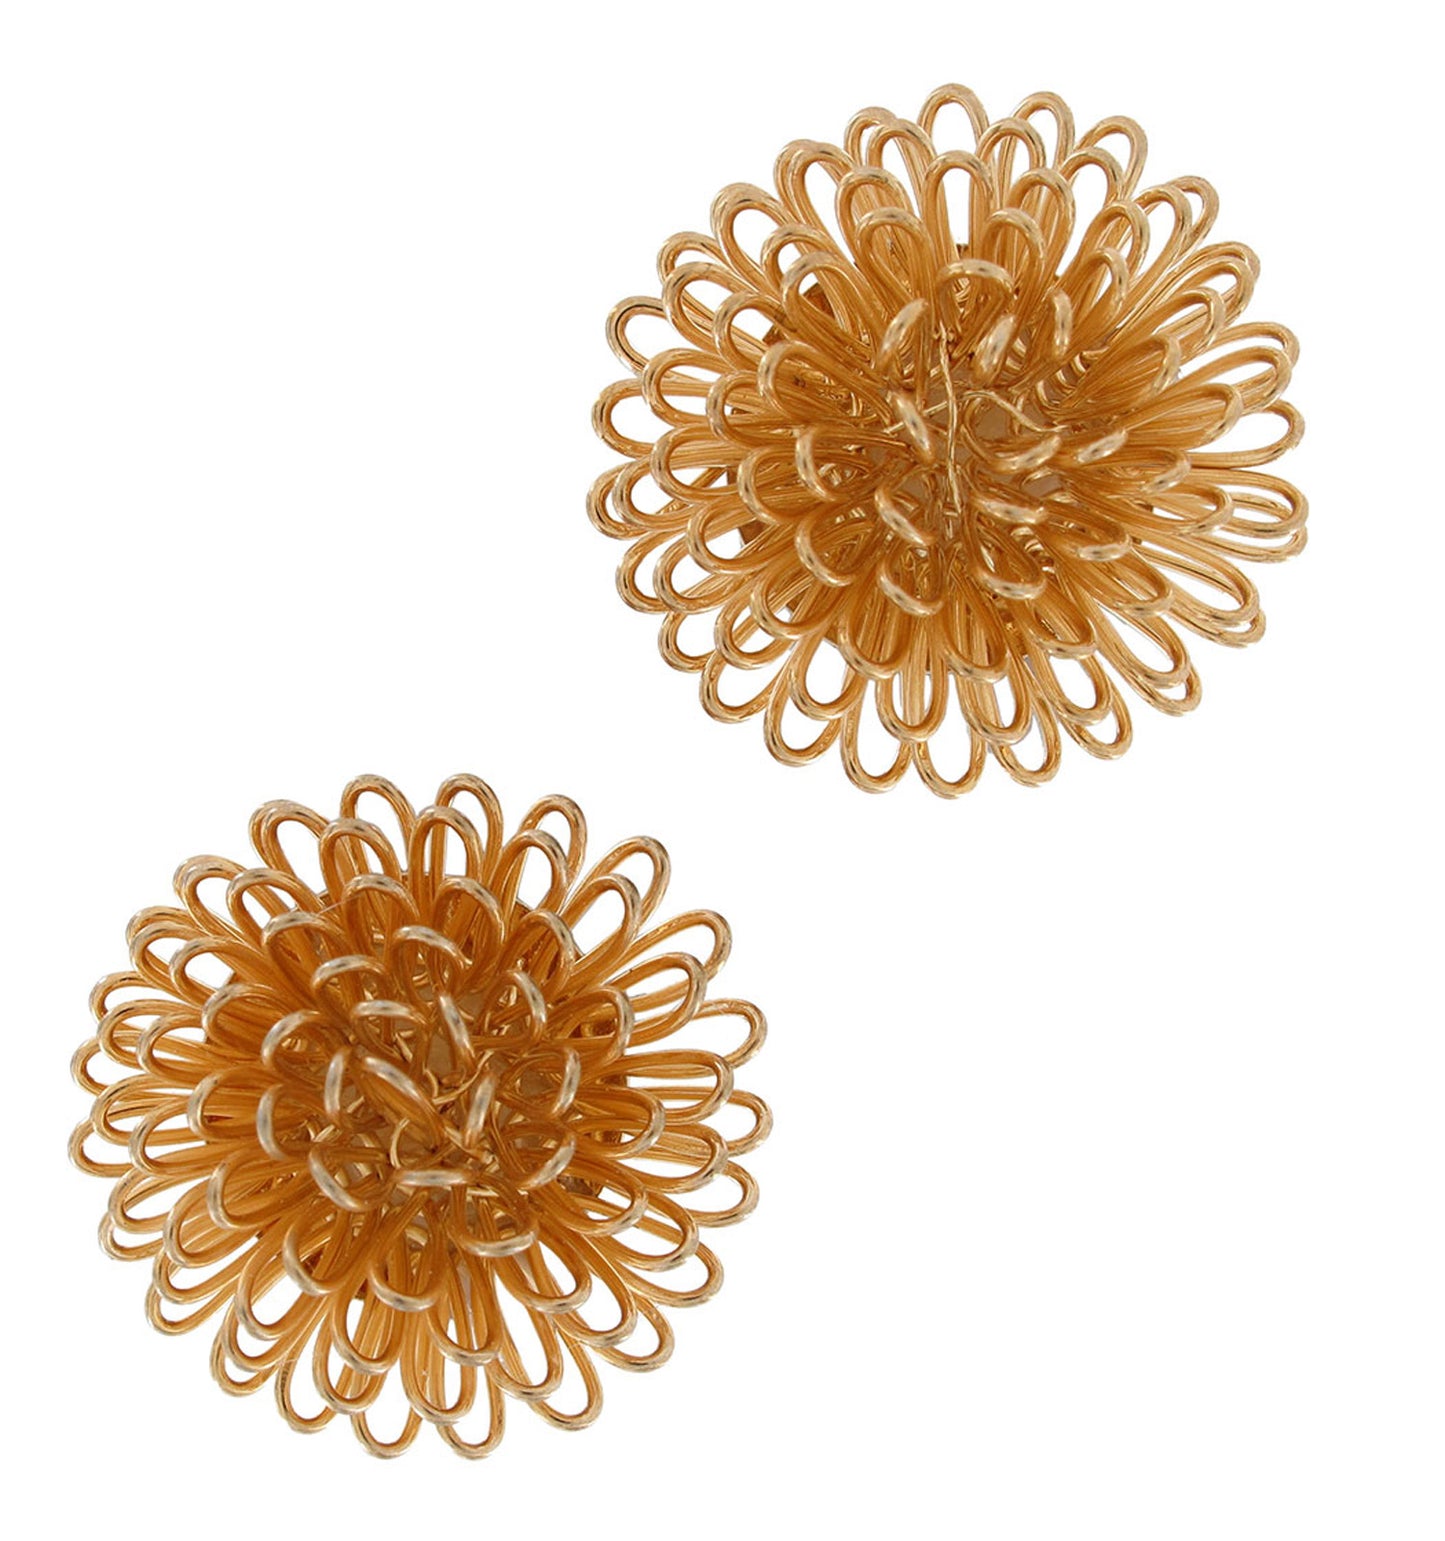 Pierced Earrings Bristle Ball Button Flower Gold Tone 7/8"